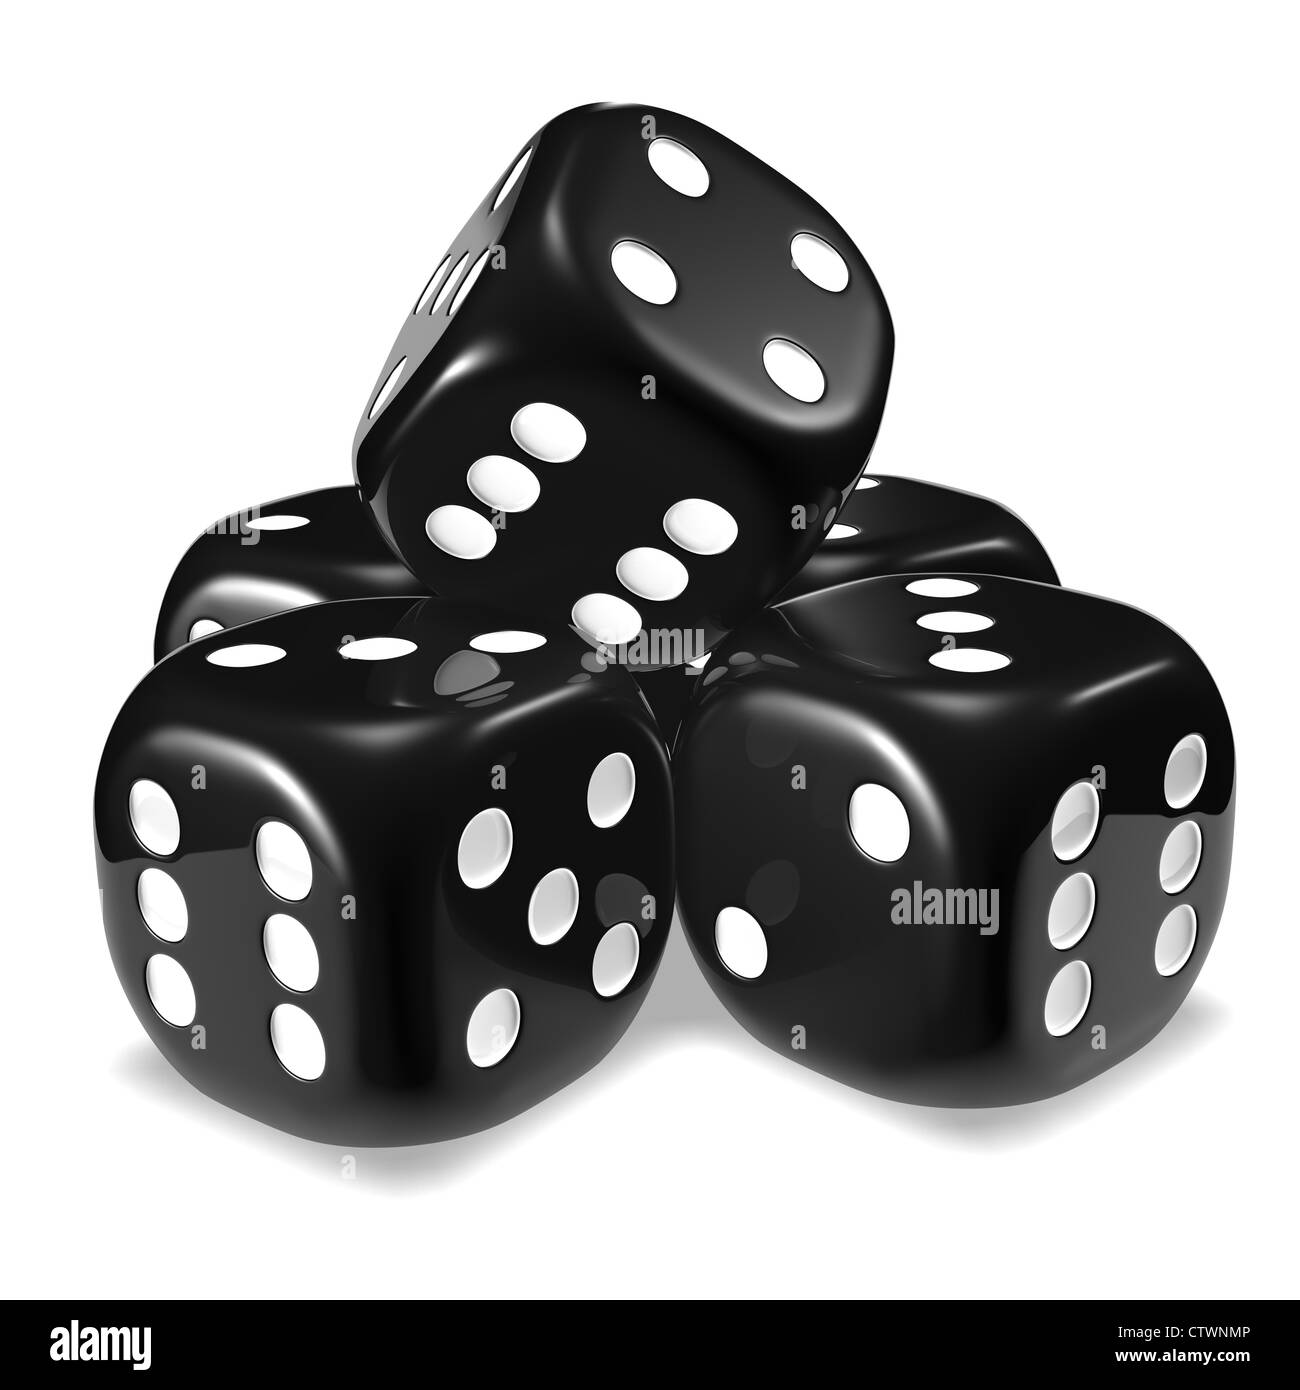 Black dice set Stock Photo